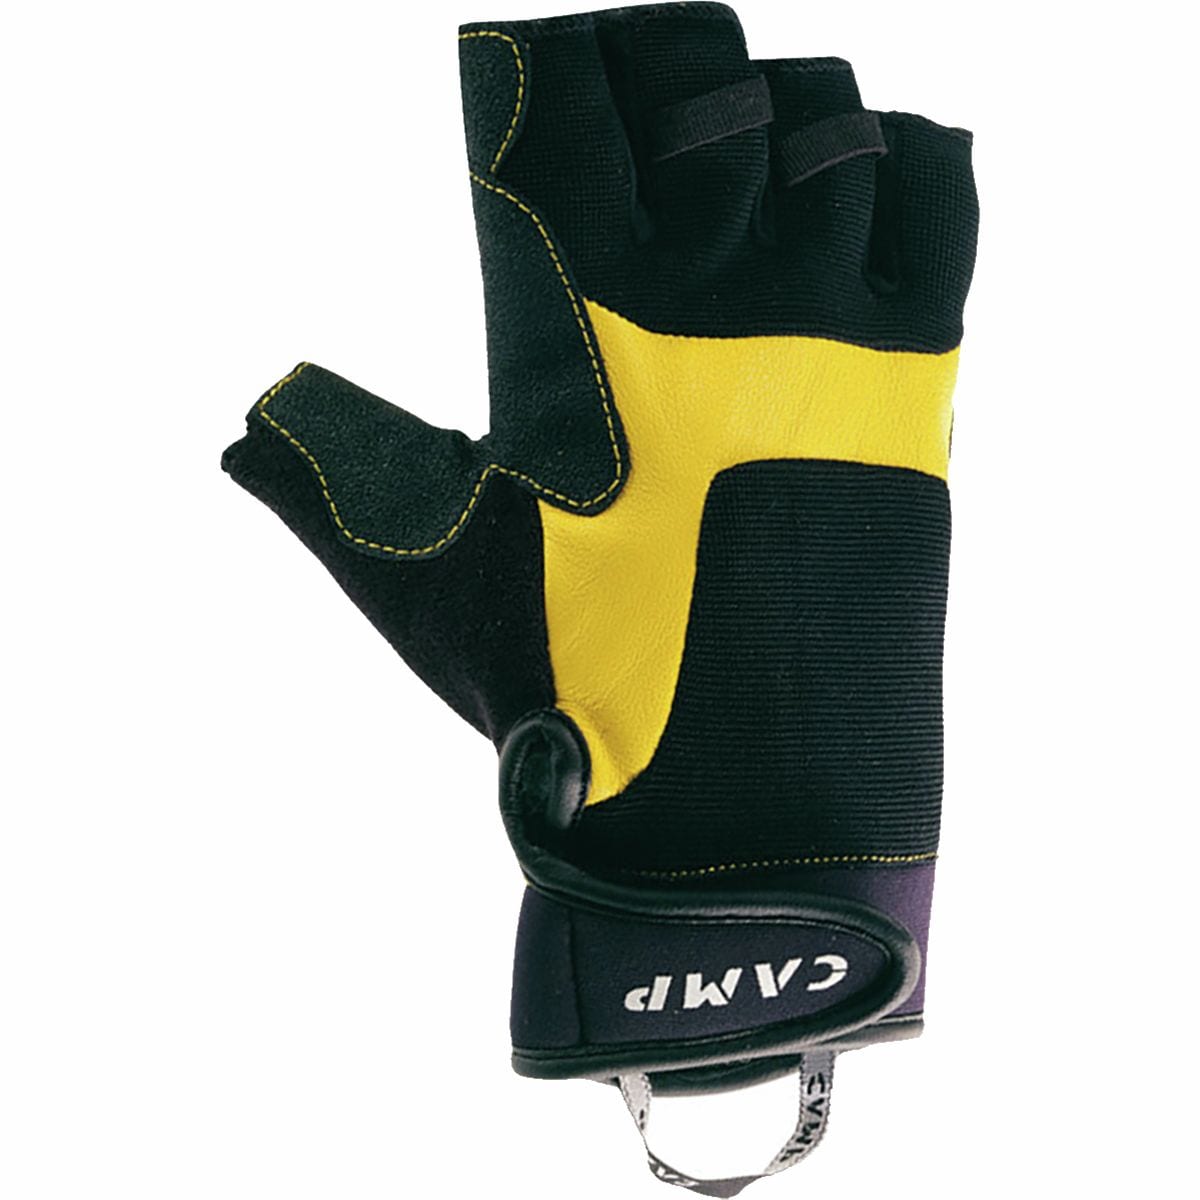 CAMP USA Pro Belay Gloves